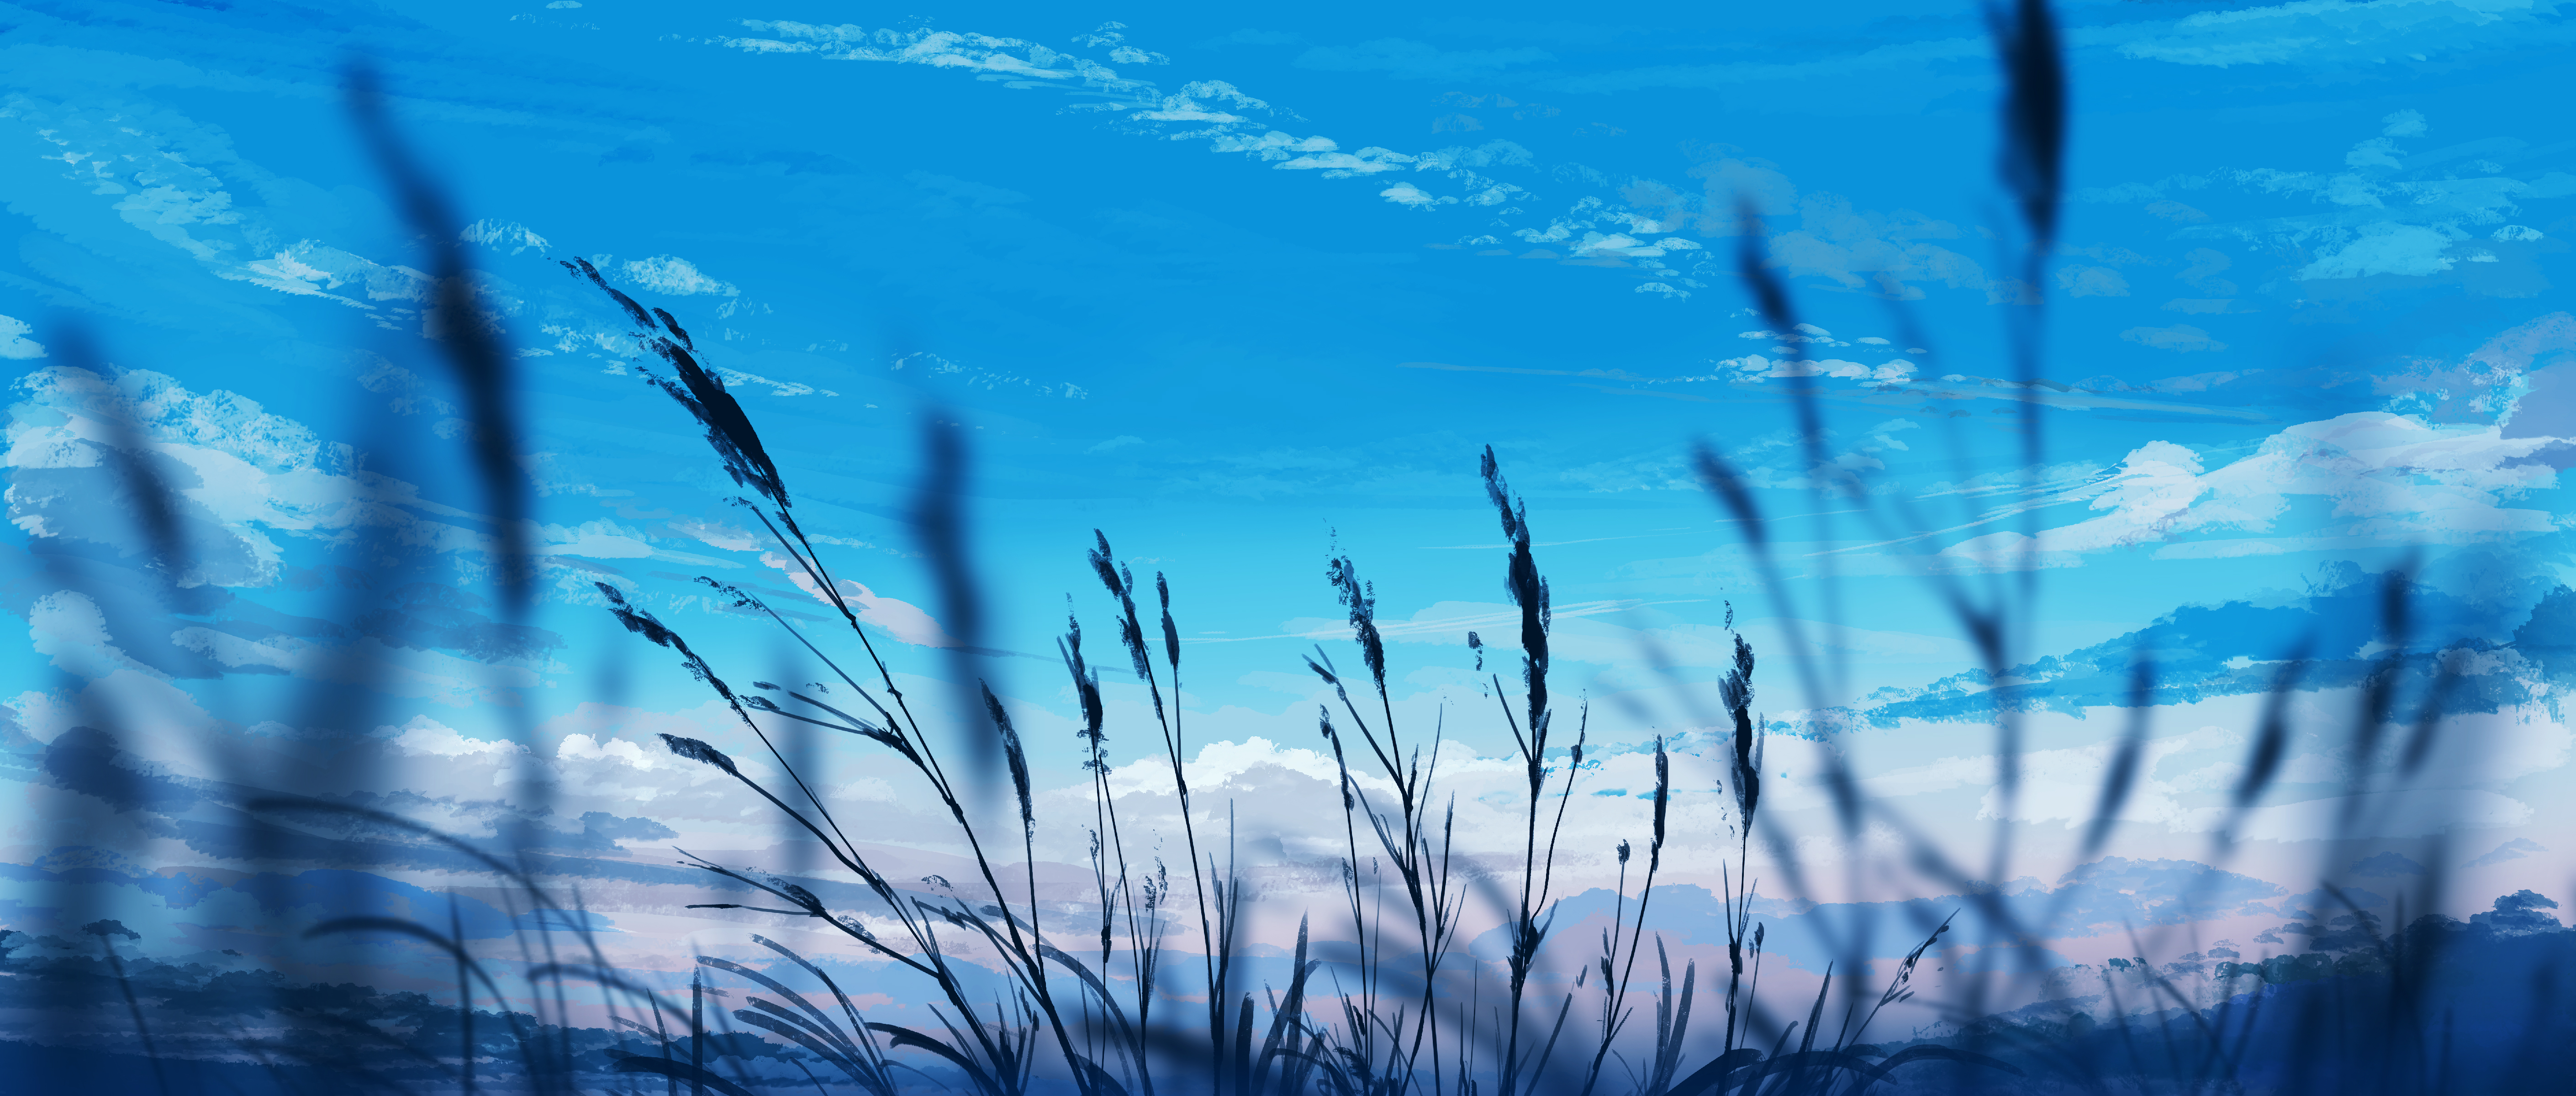 Gracile Digital Art Artwork Illustration Environment Wide Screen Ultrawide Blue Sky Clouds Field 5640x2400